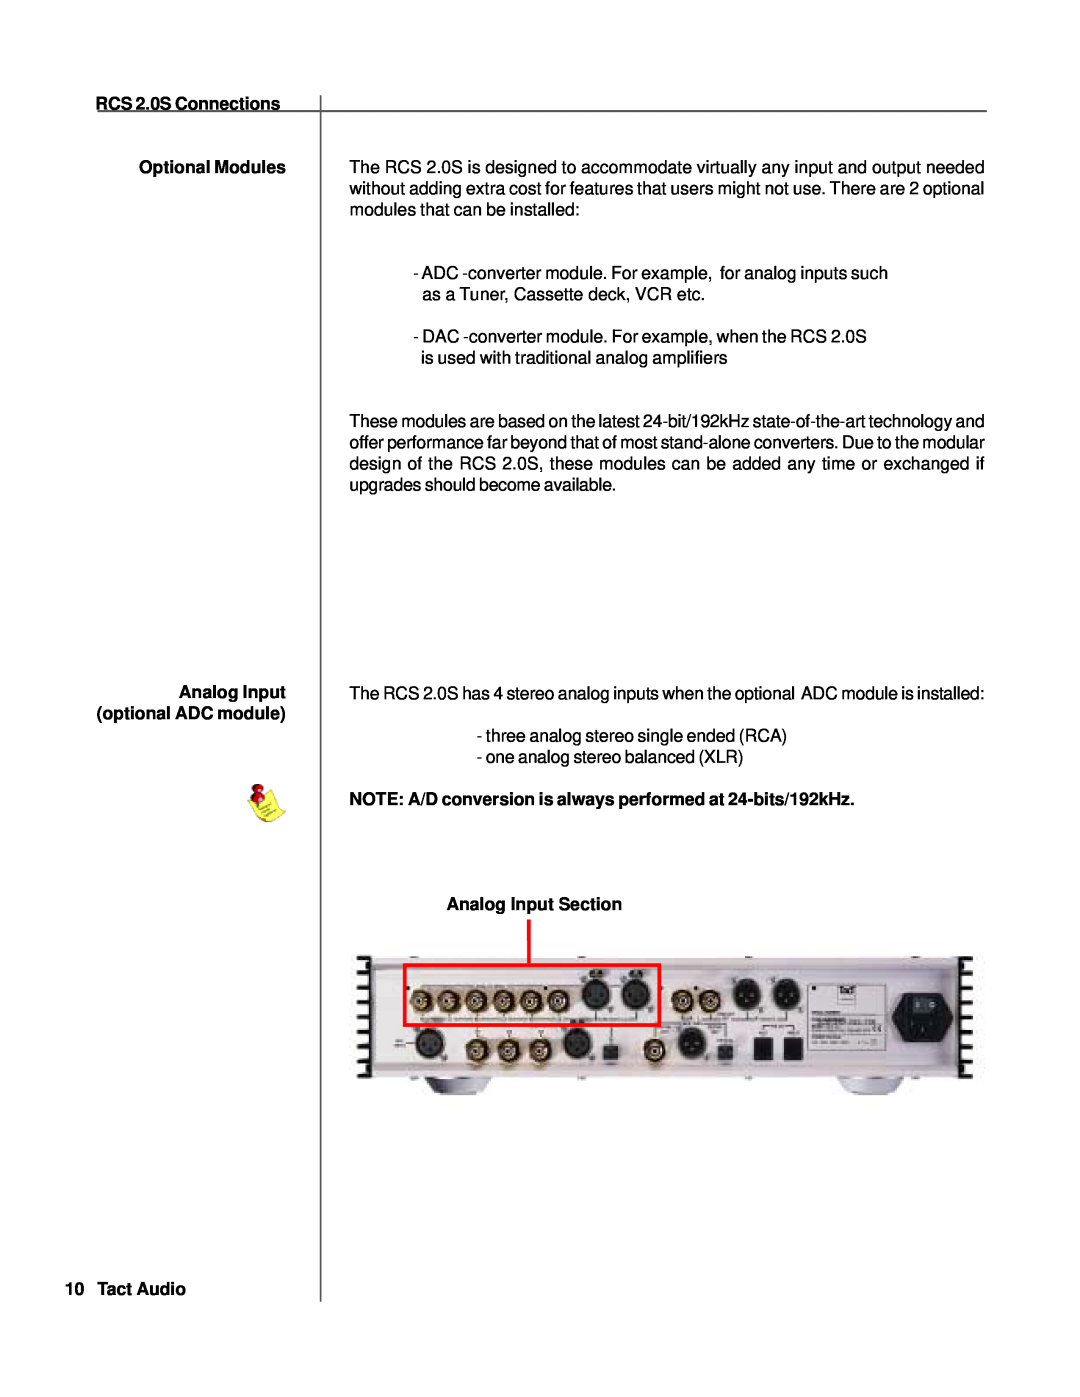 TacT Audio RCS 2.0S Connections, Optional Modules, Analog Input, optional ADC module, one analog stereo balanced XLR 